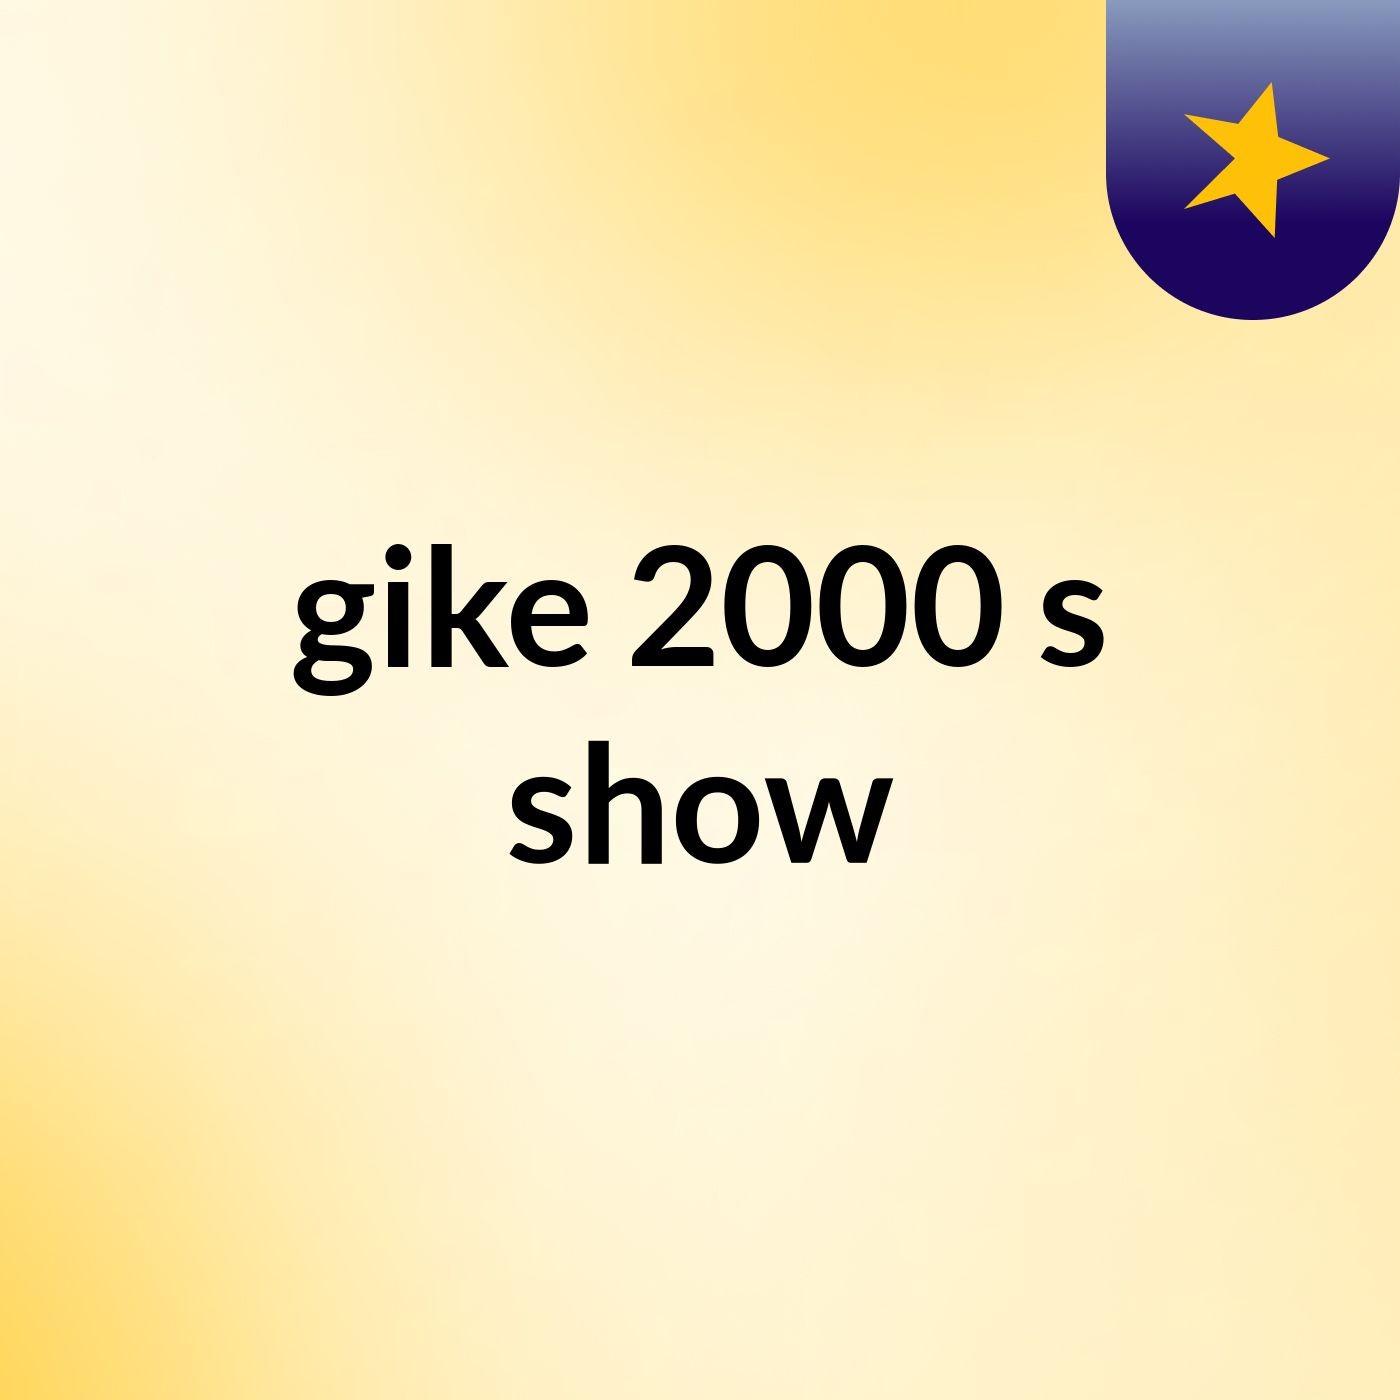 gike 2000's show